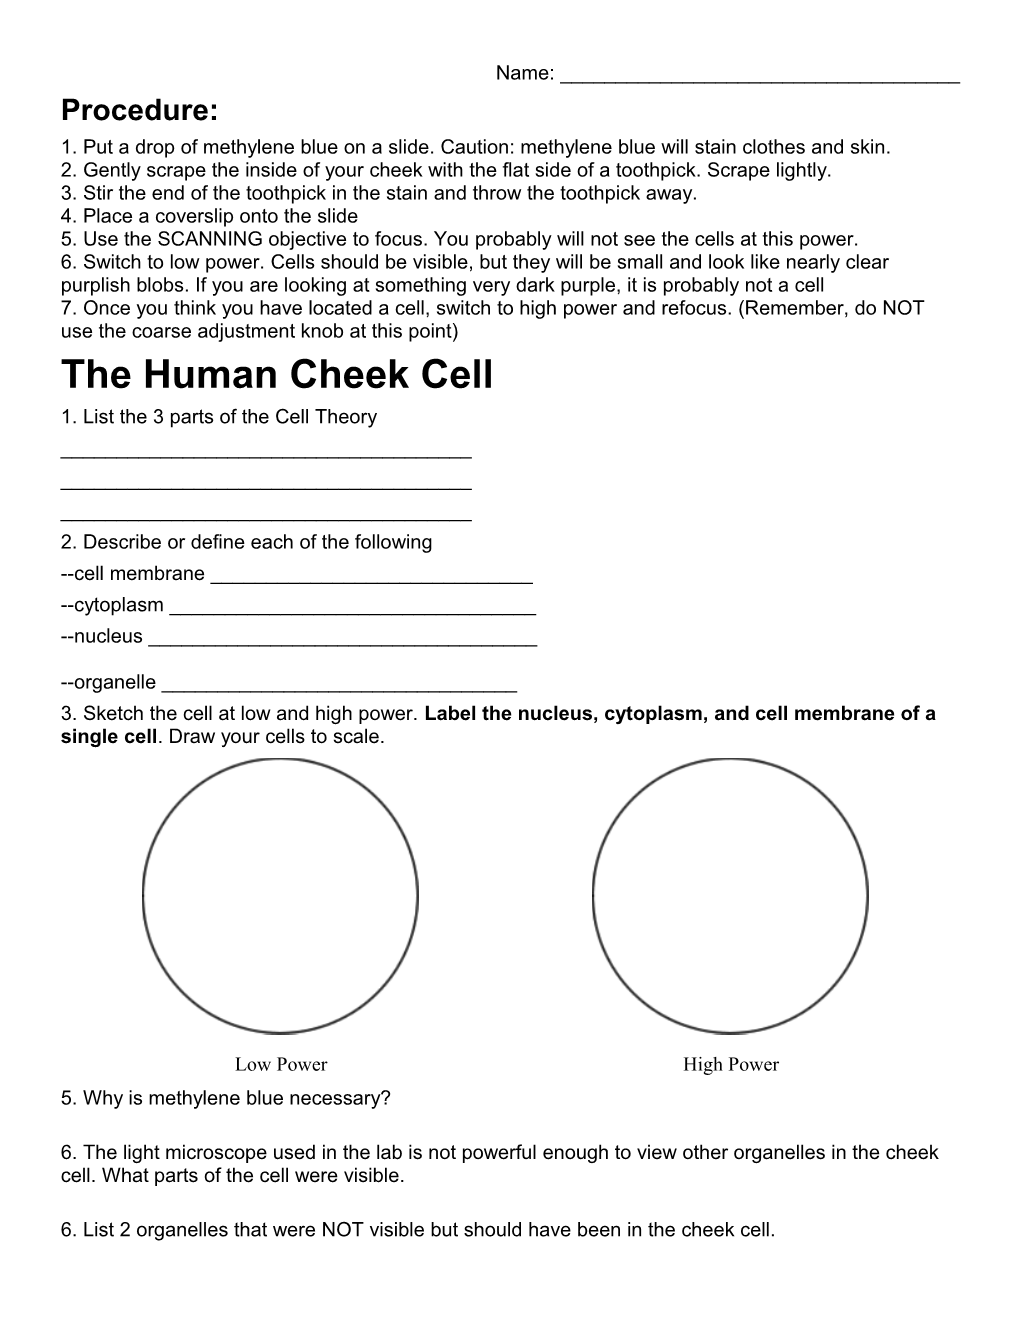 The Human Cheek Cell